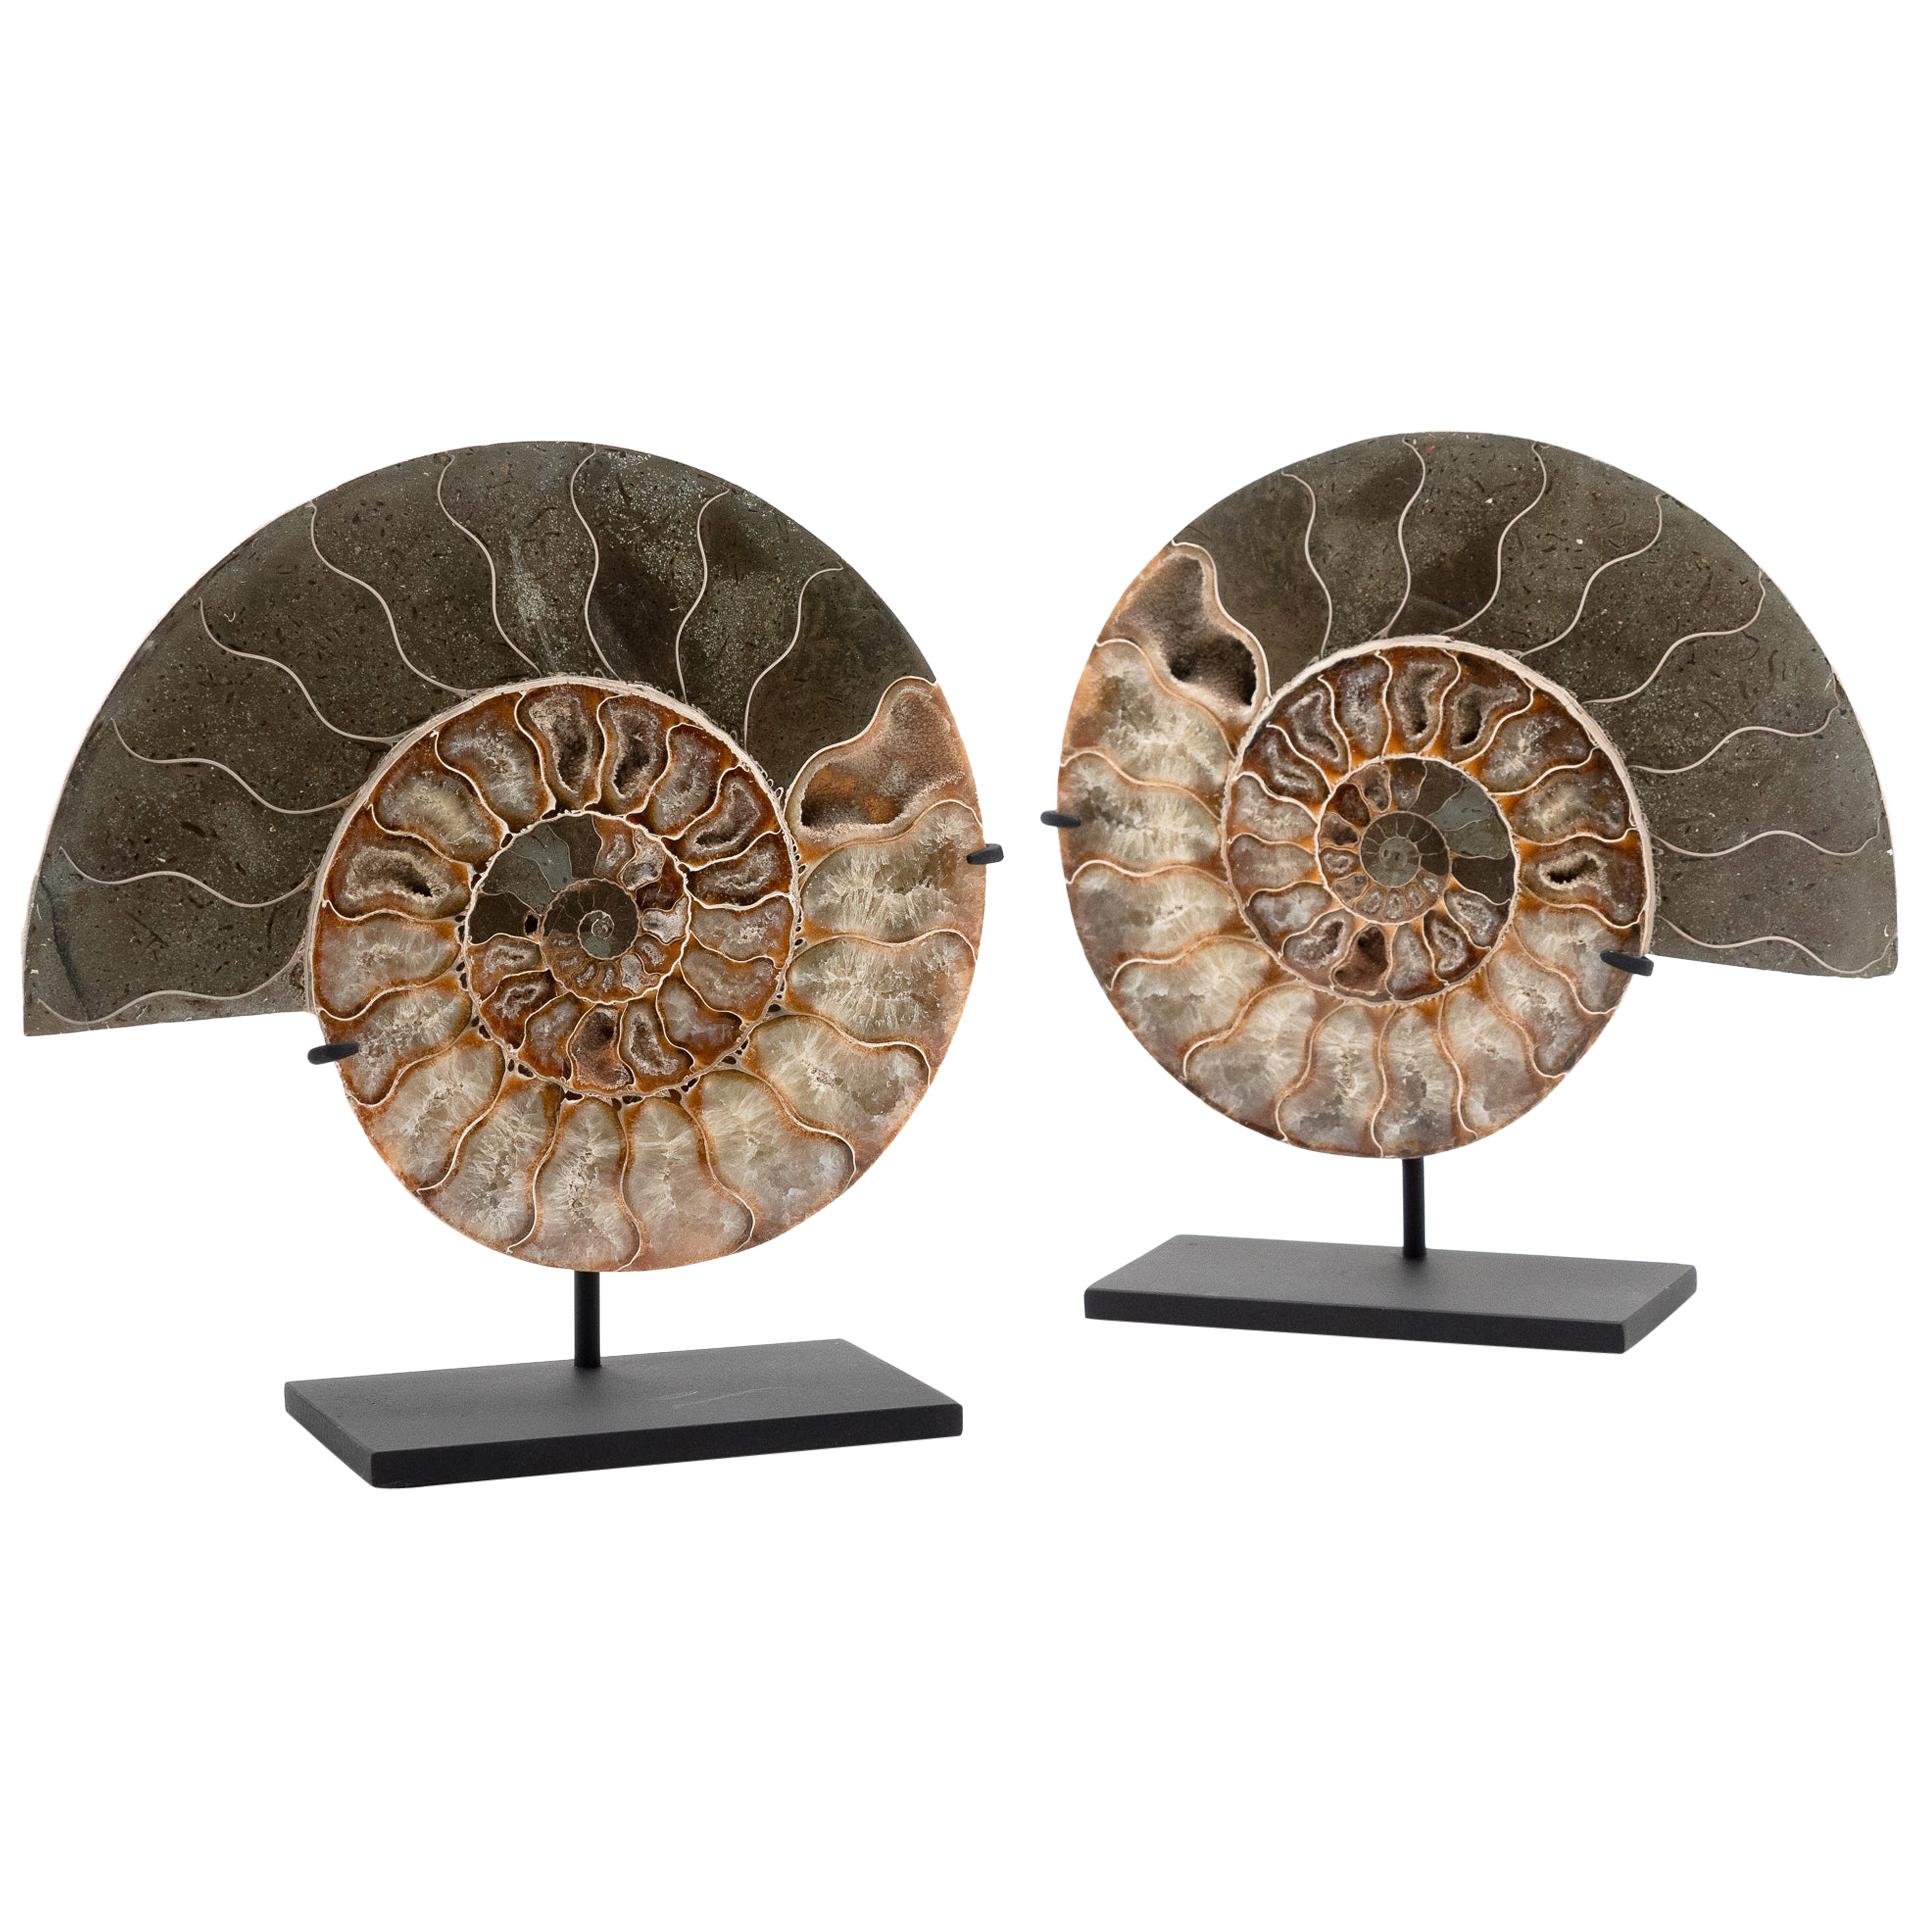 Fossilized Mounted Ammonite Slices on Custom Black Metal Bases, Pair